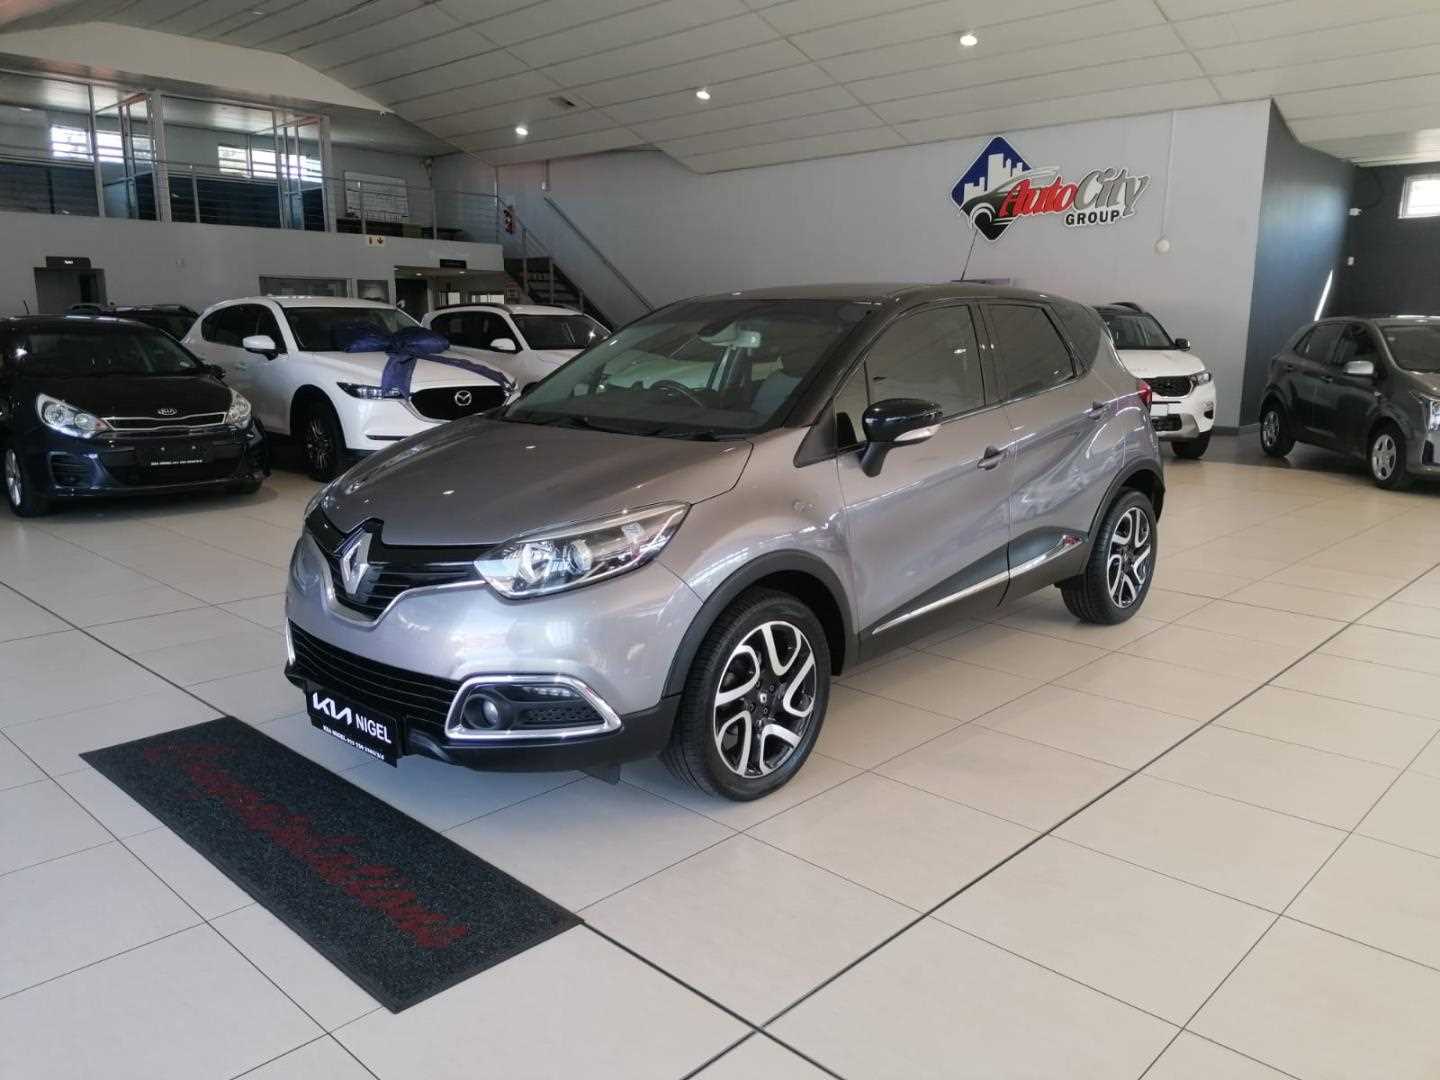 Renault CAPTUR 900T DYNAMIQUE 5DR (66KW) for Sale in South Africa